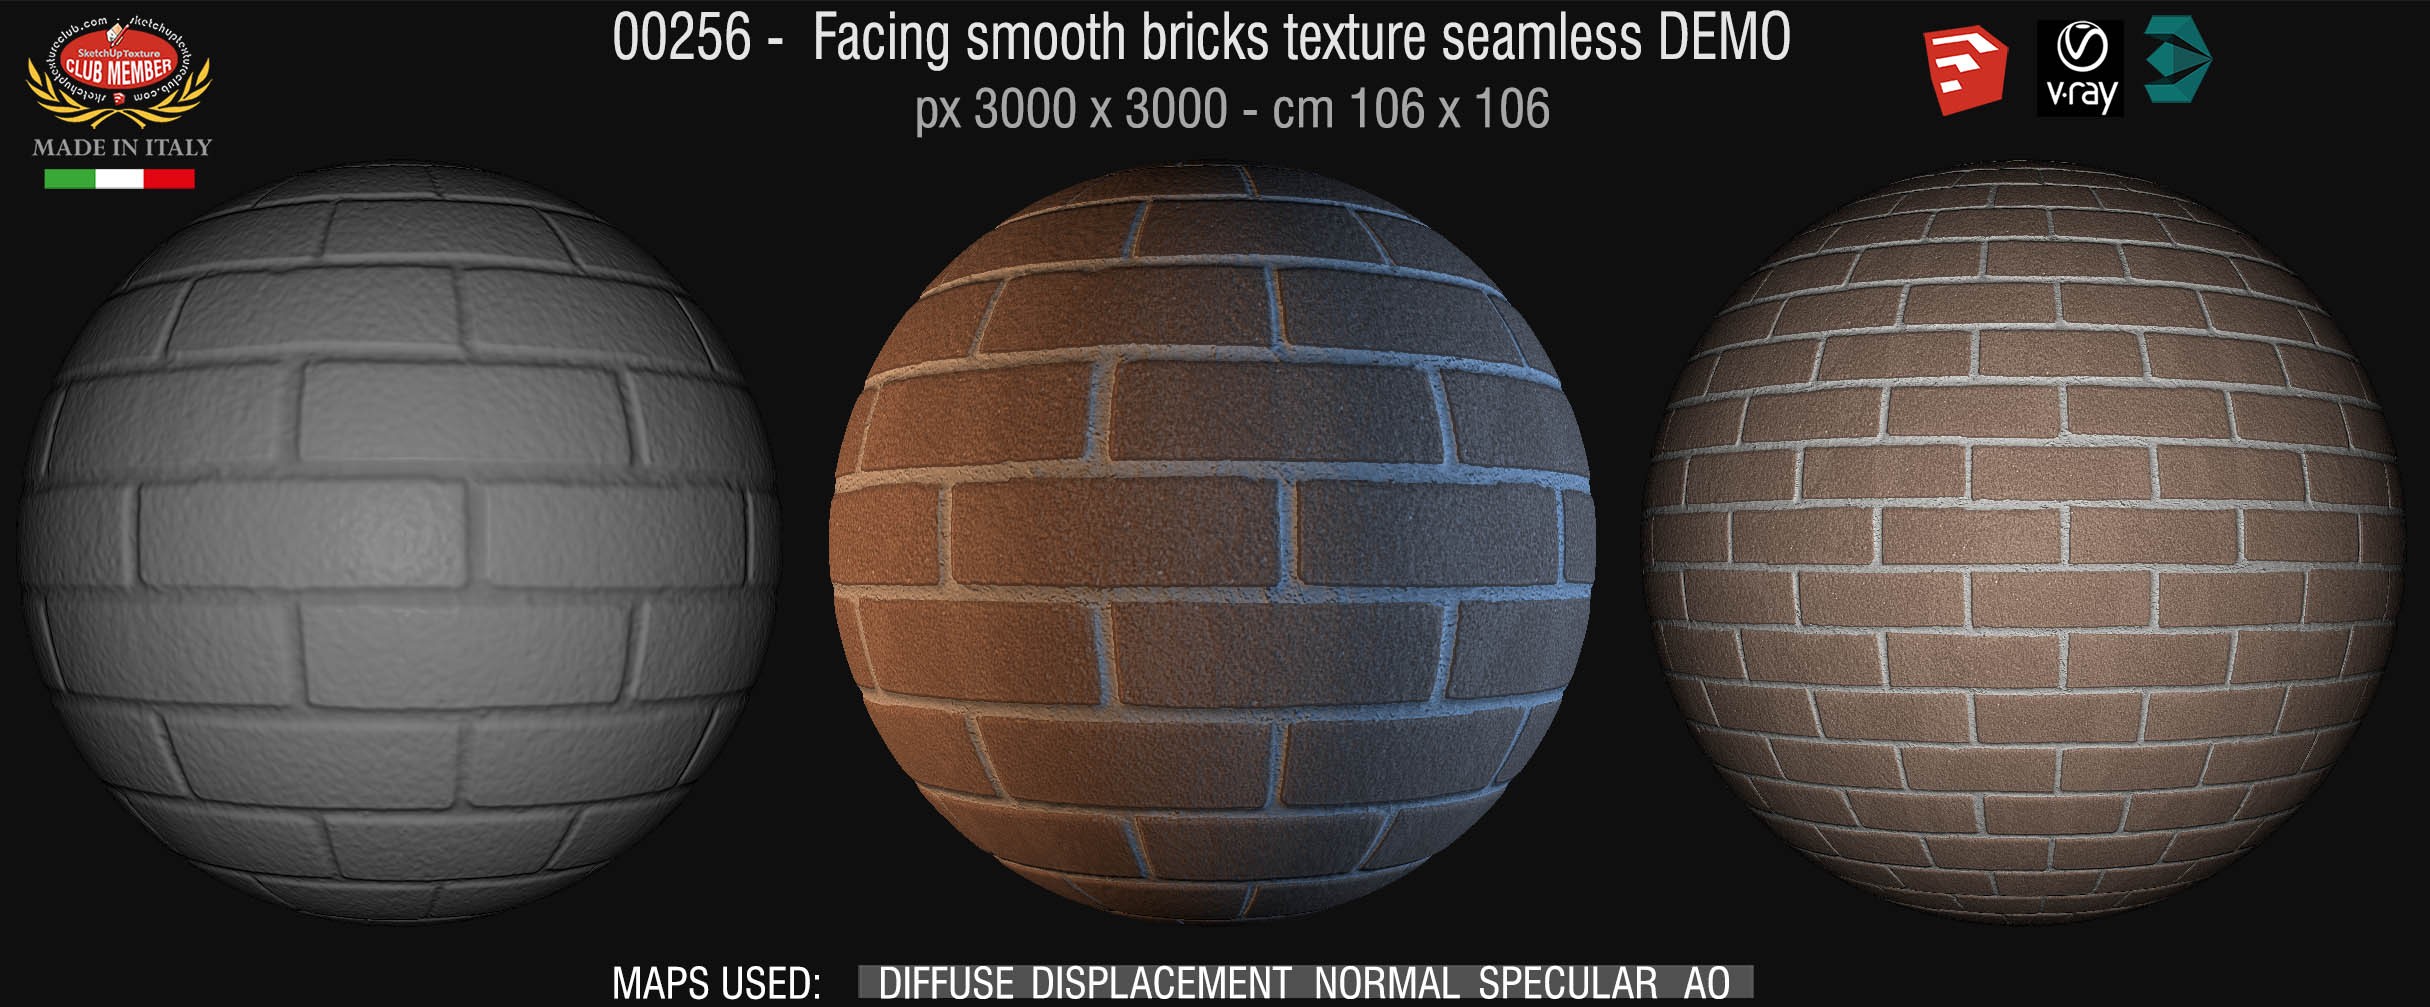 00257 Facing smooth bricks texture seamless + maps DEMO